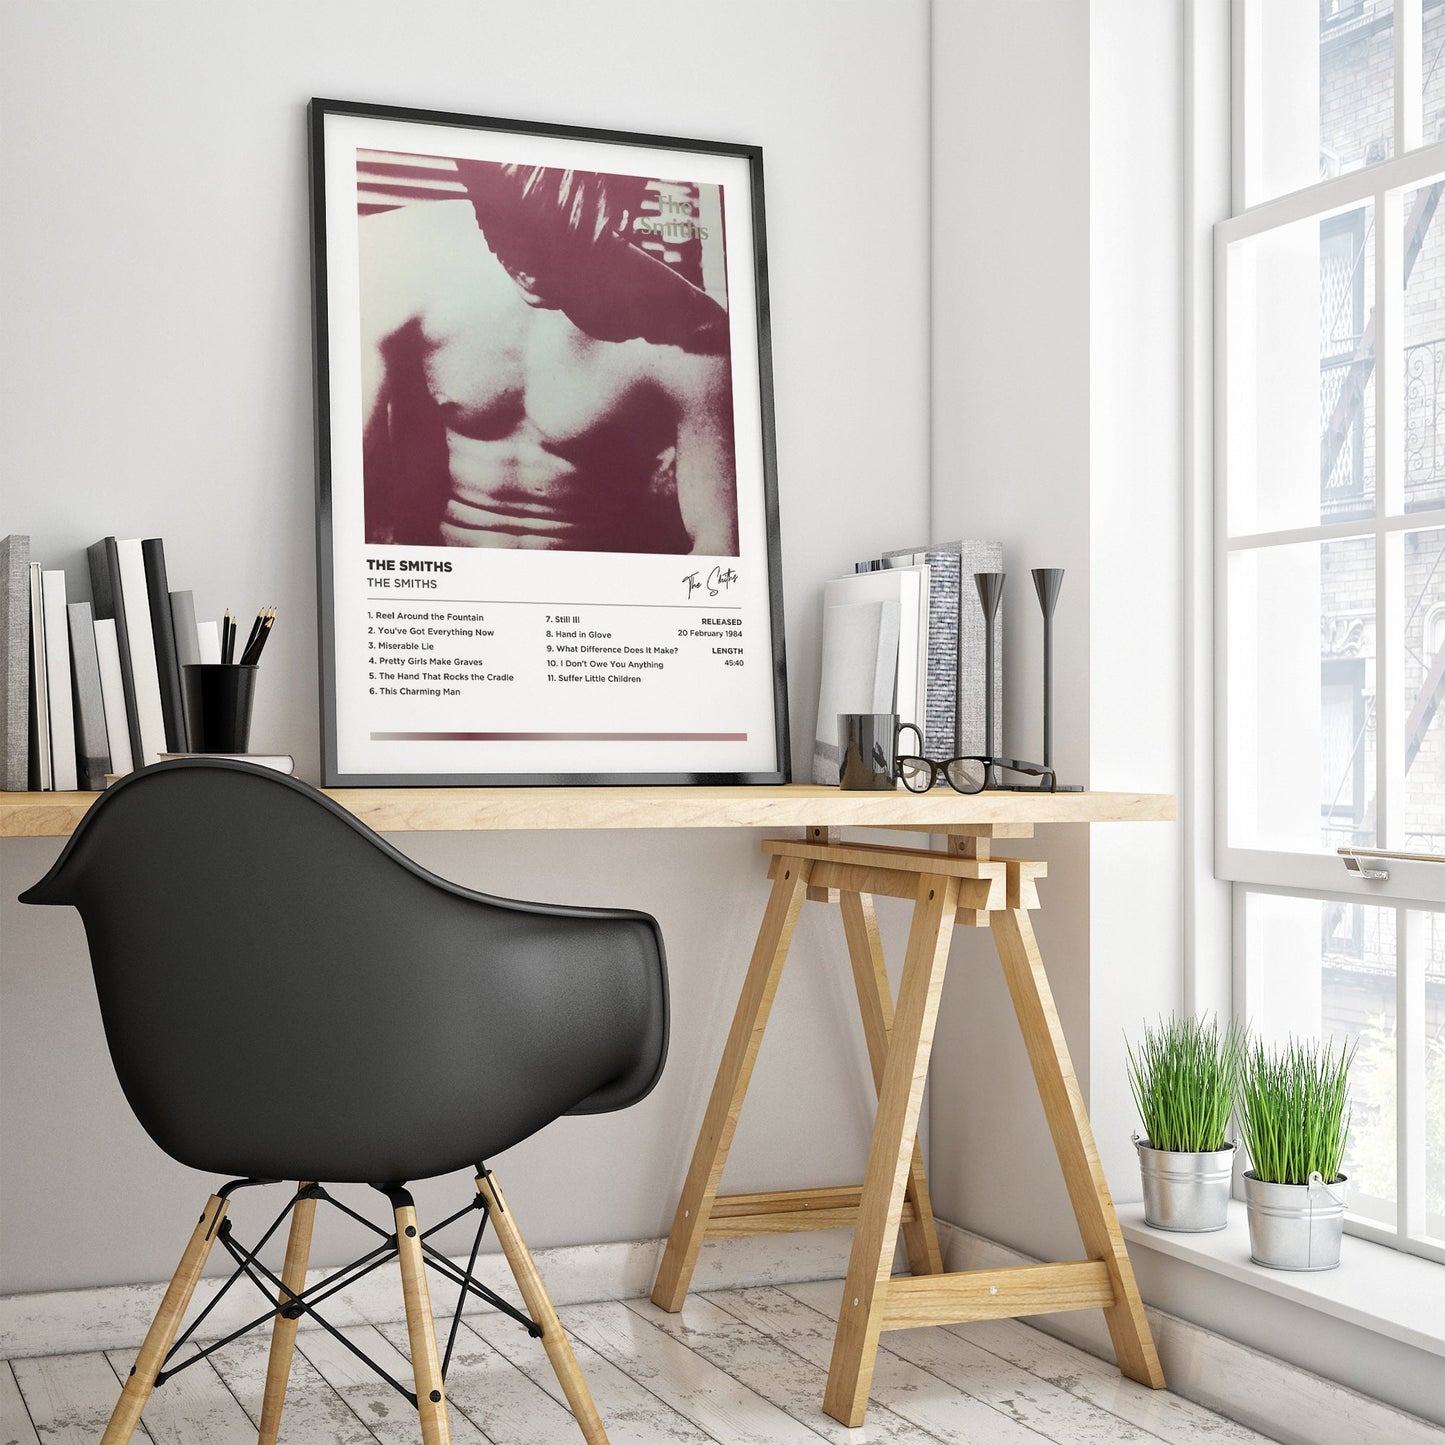 The Smiths - The Smiths Framed Poster Print | Polaroid Style | Album Cover Artwork